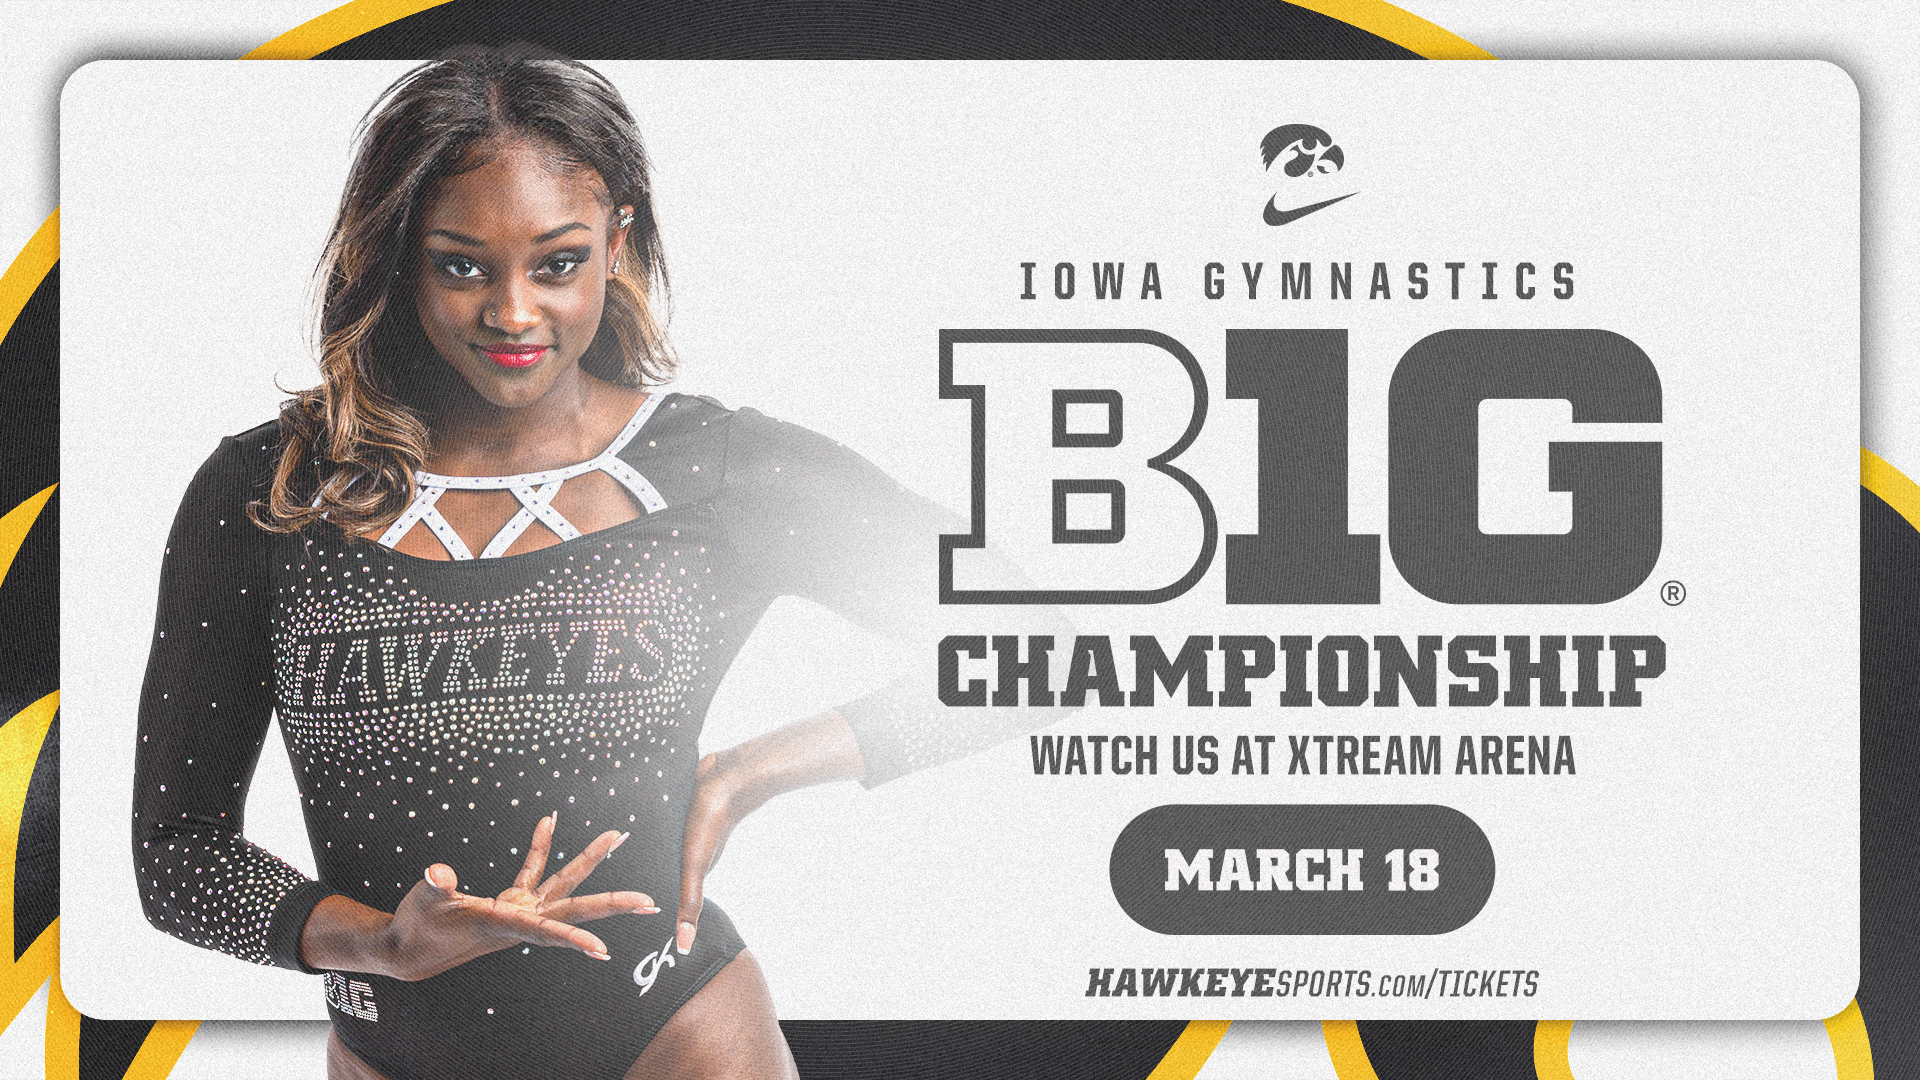 Big Ten Gymnastics Championship on March 18 at Xtreme Arena